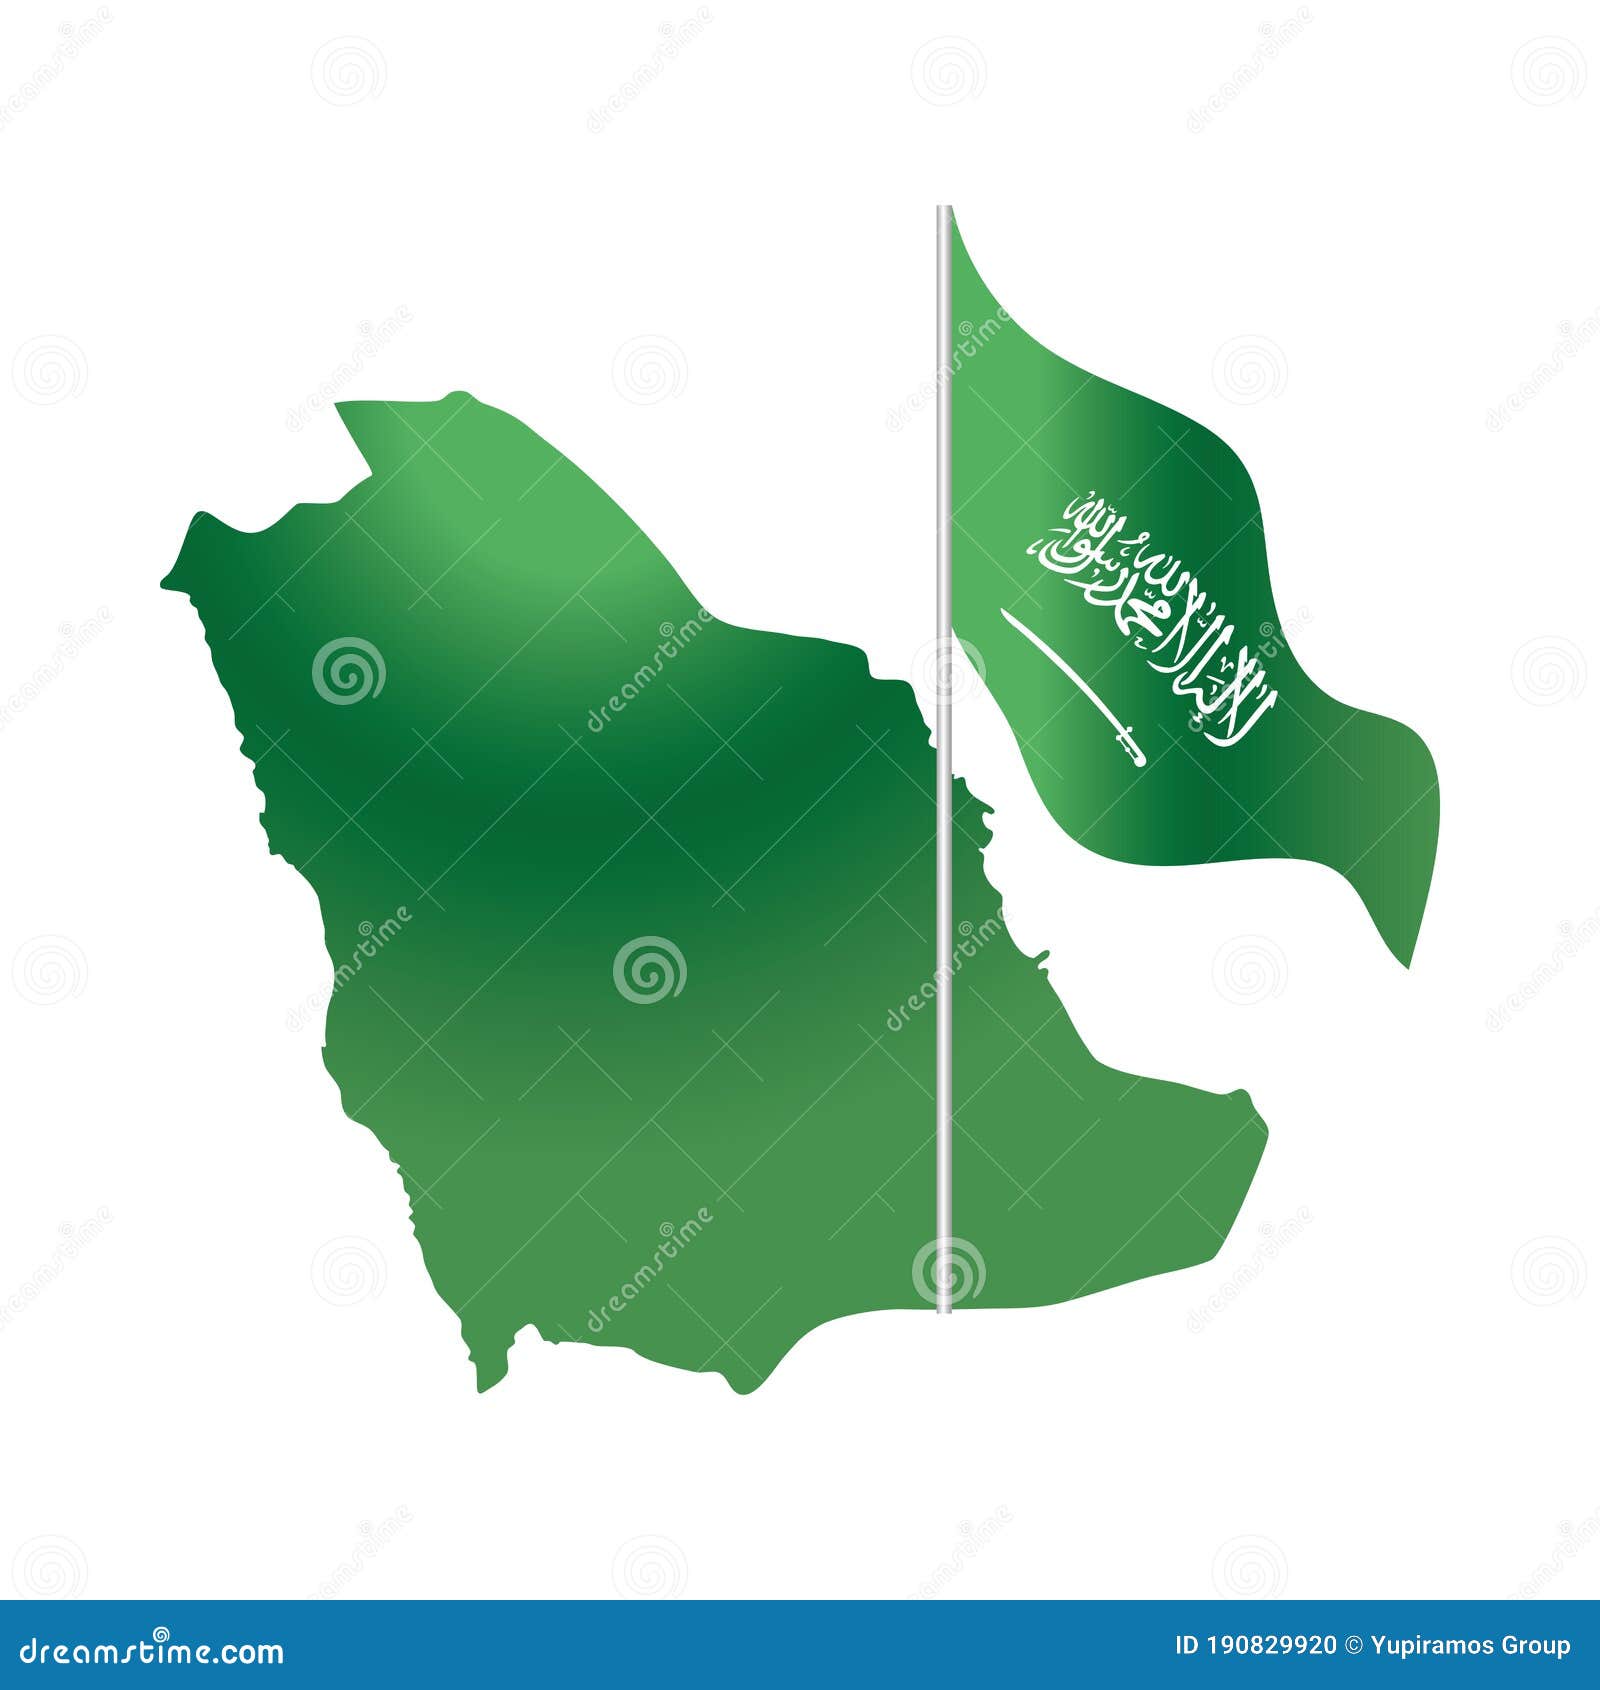 Saudi Arabia National Day, Green Map With Flag Kingdom ...